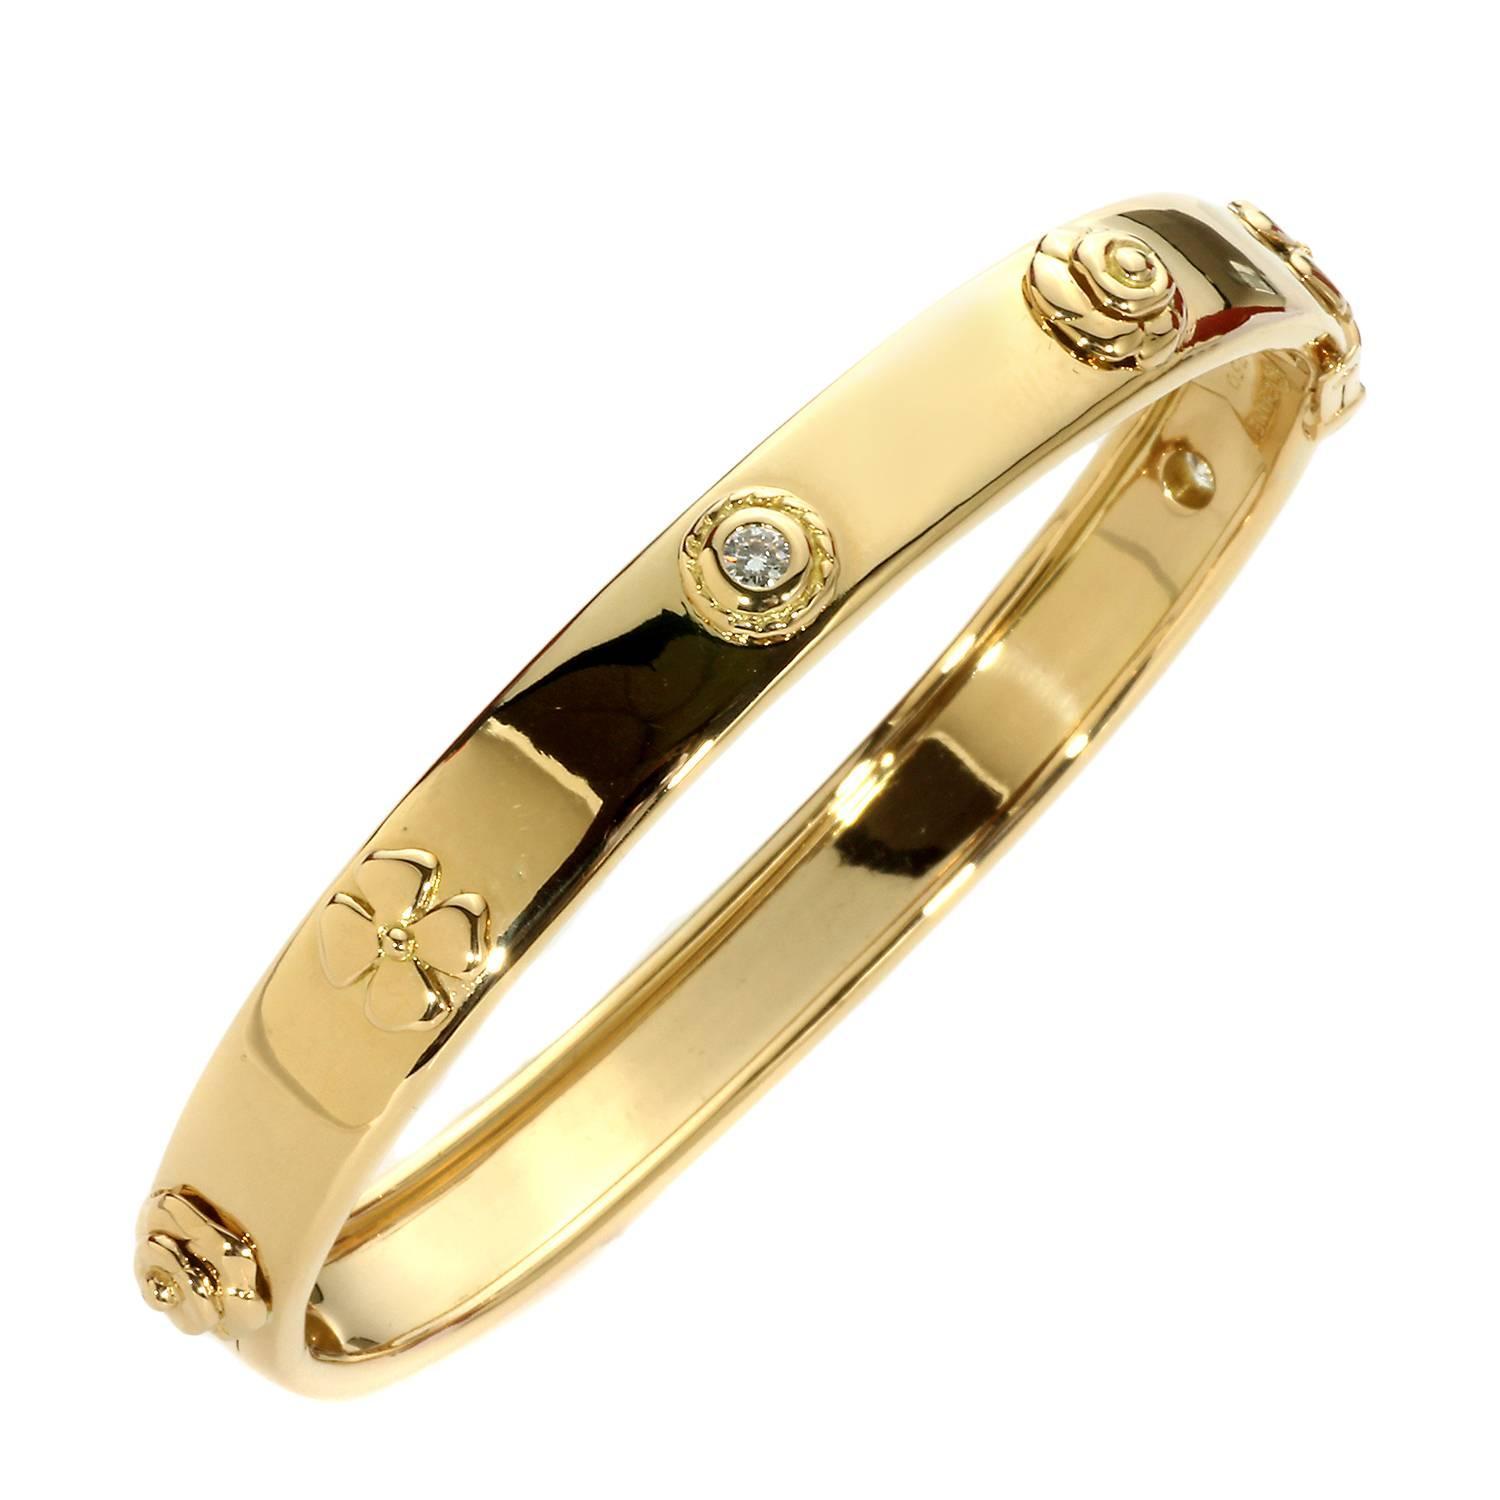 Louis Vuitton Diamond Gold Bangle Bracelet For Sale at 1stdibs